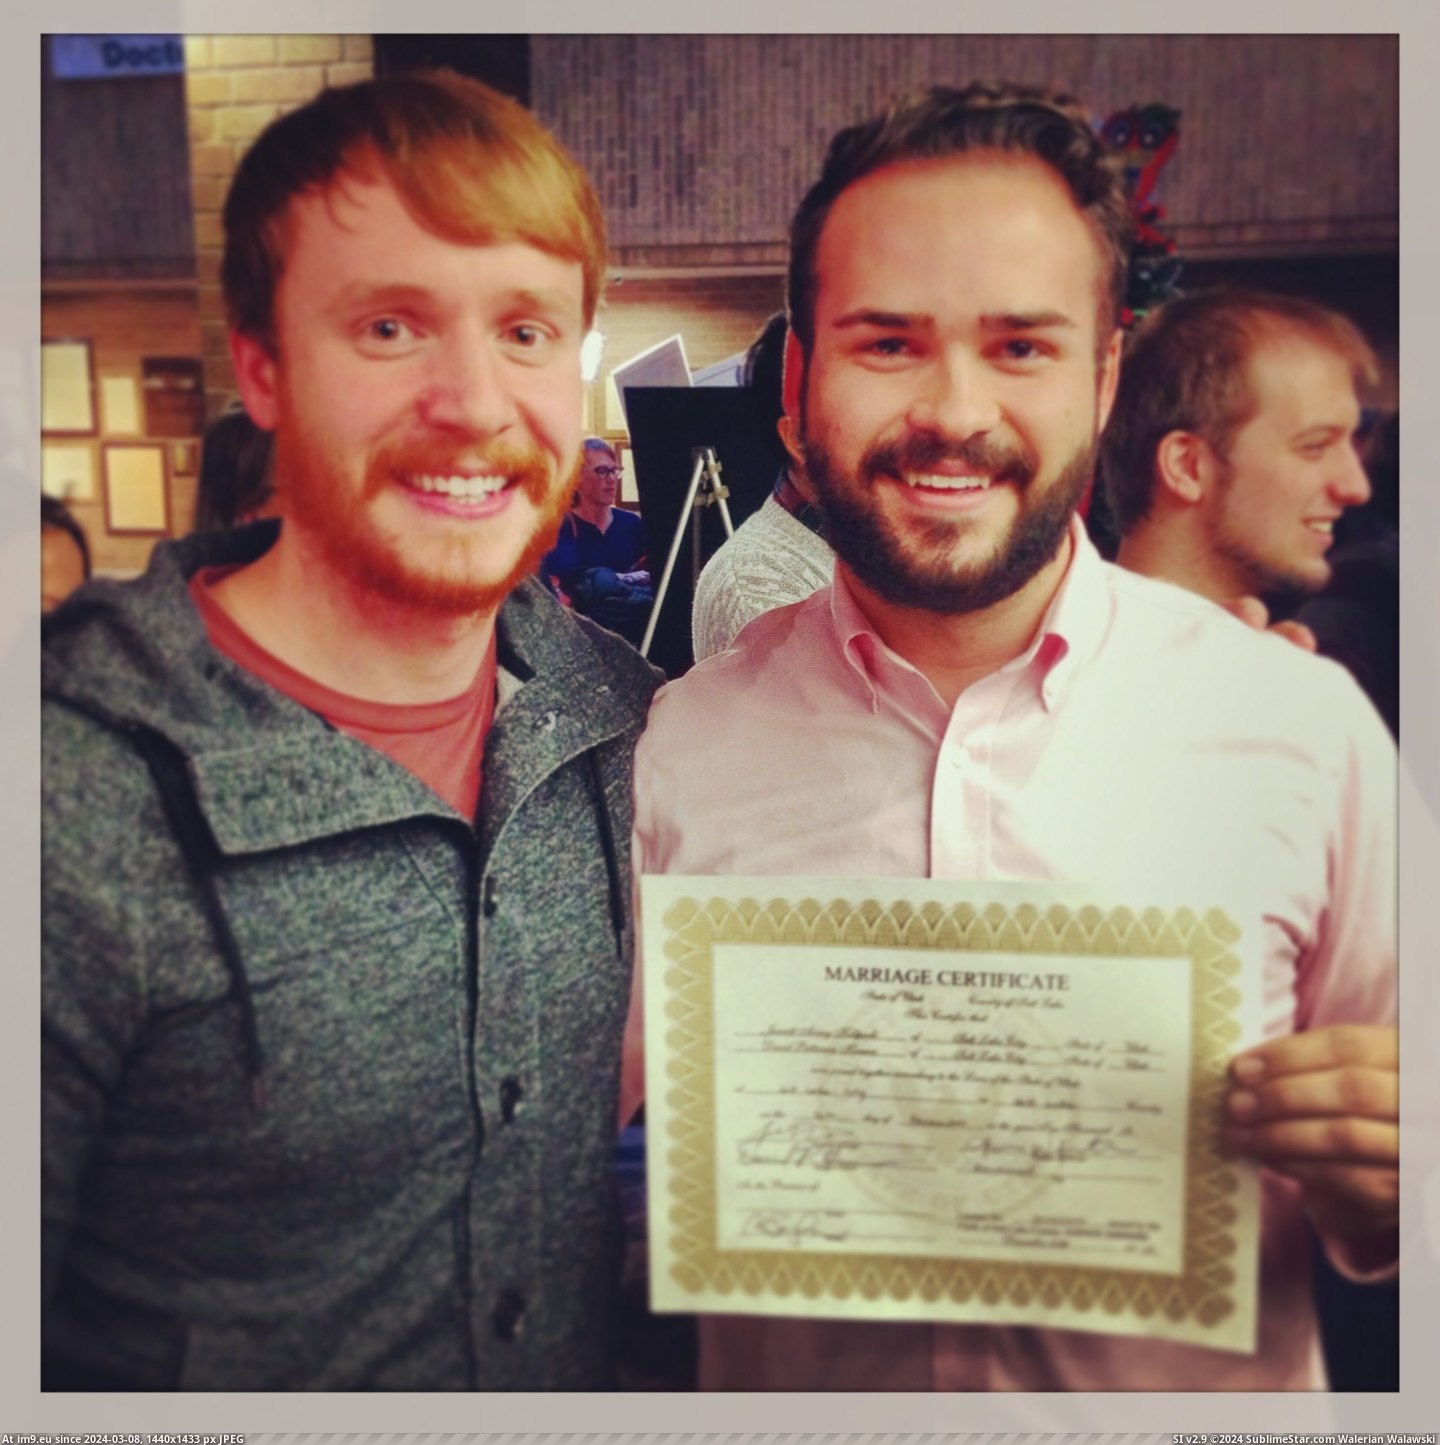 #Gay #All #Married #Got #Utah [Pics] Just got gay married in Utah y'all! Pic. (Obraz z album My r/PICS favs))